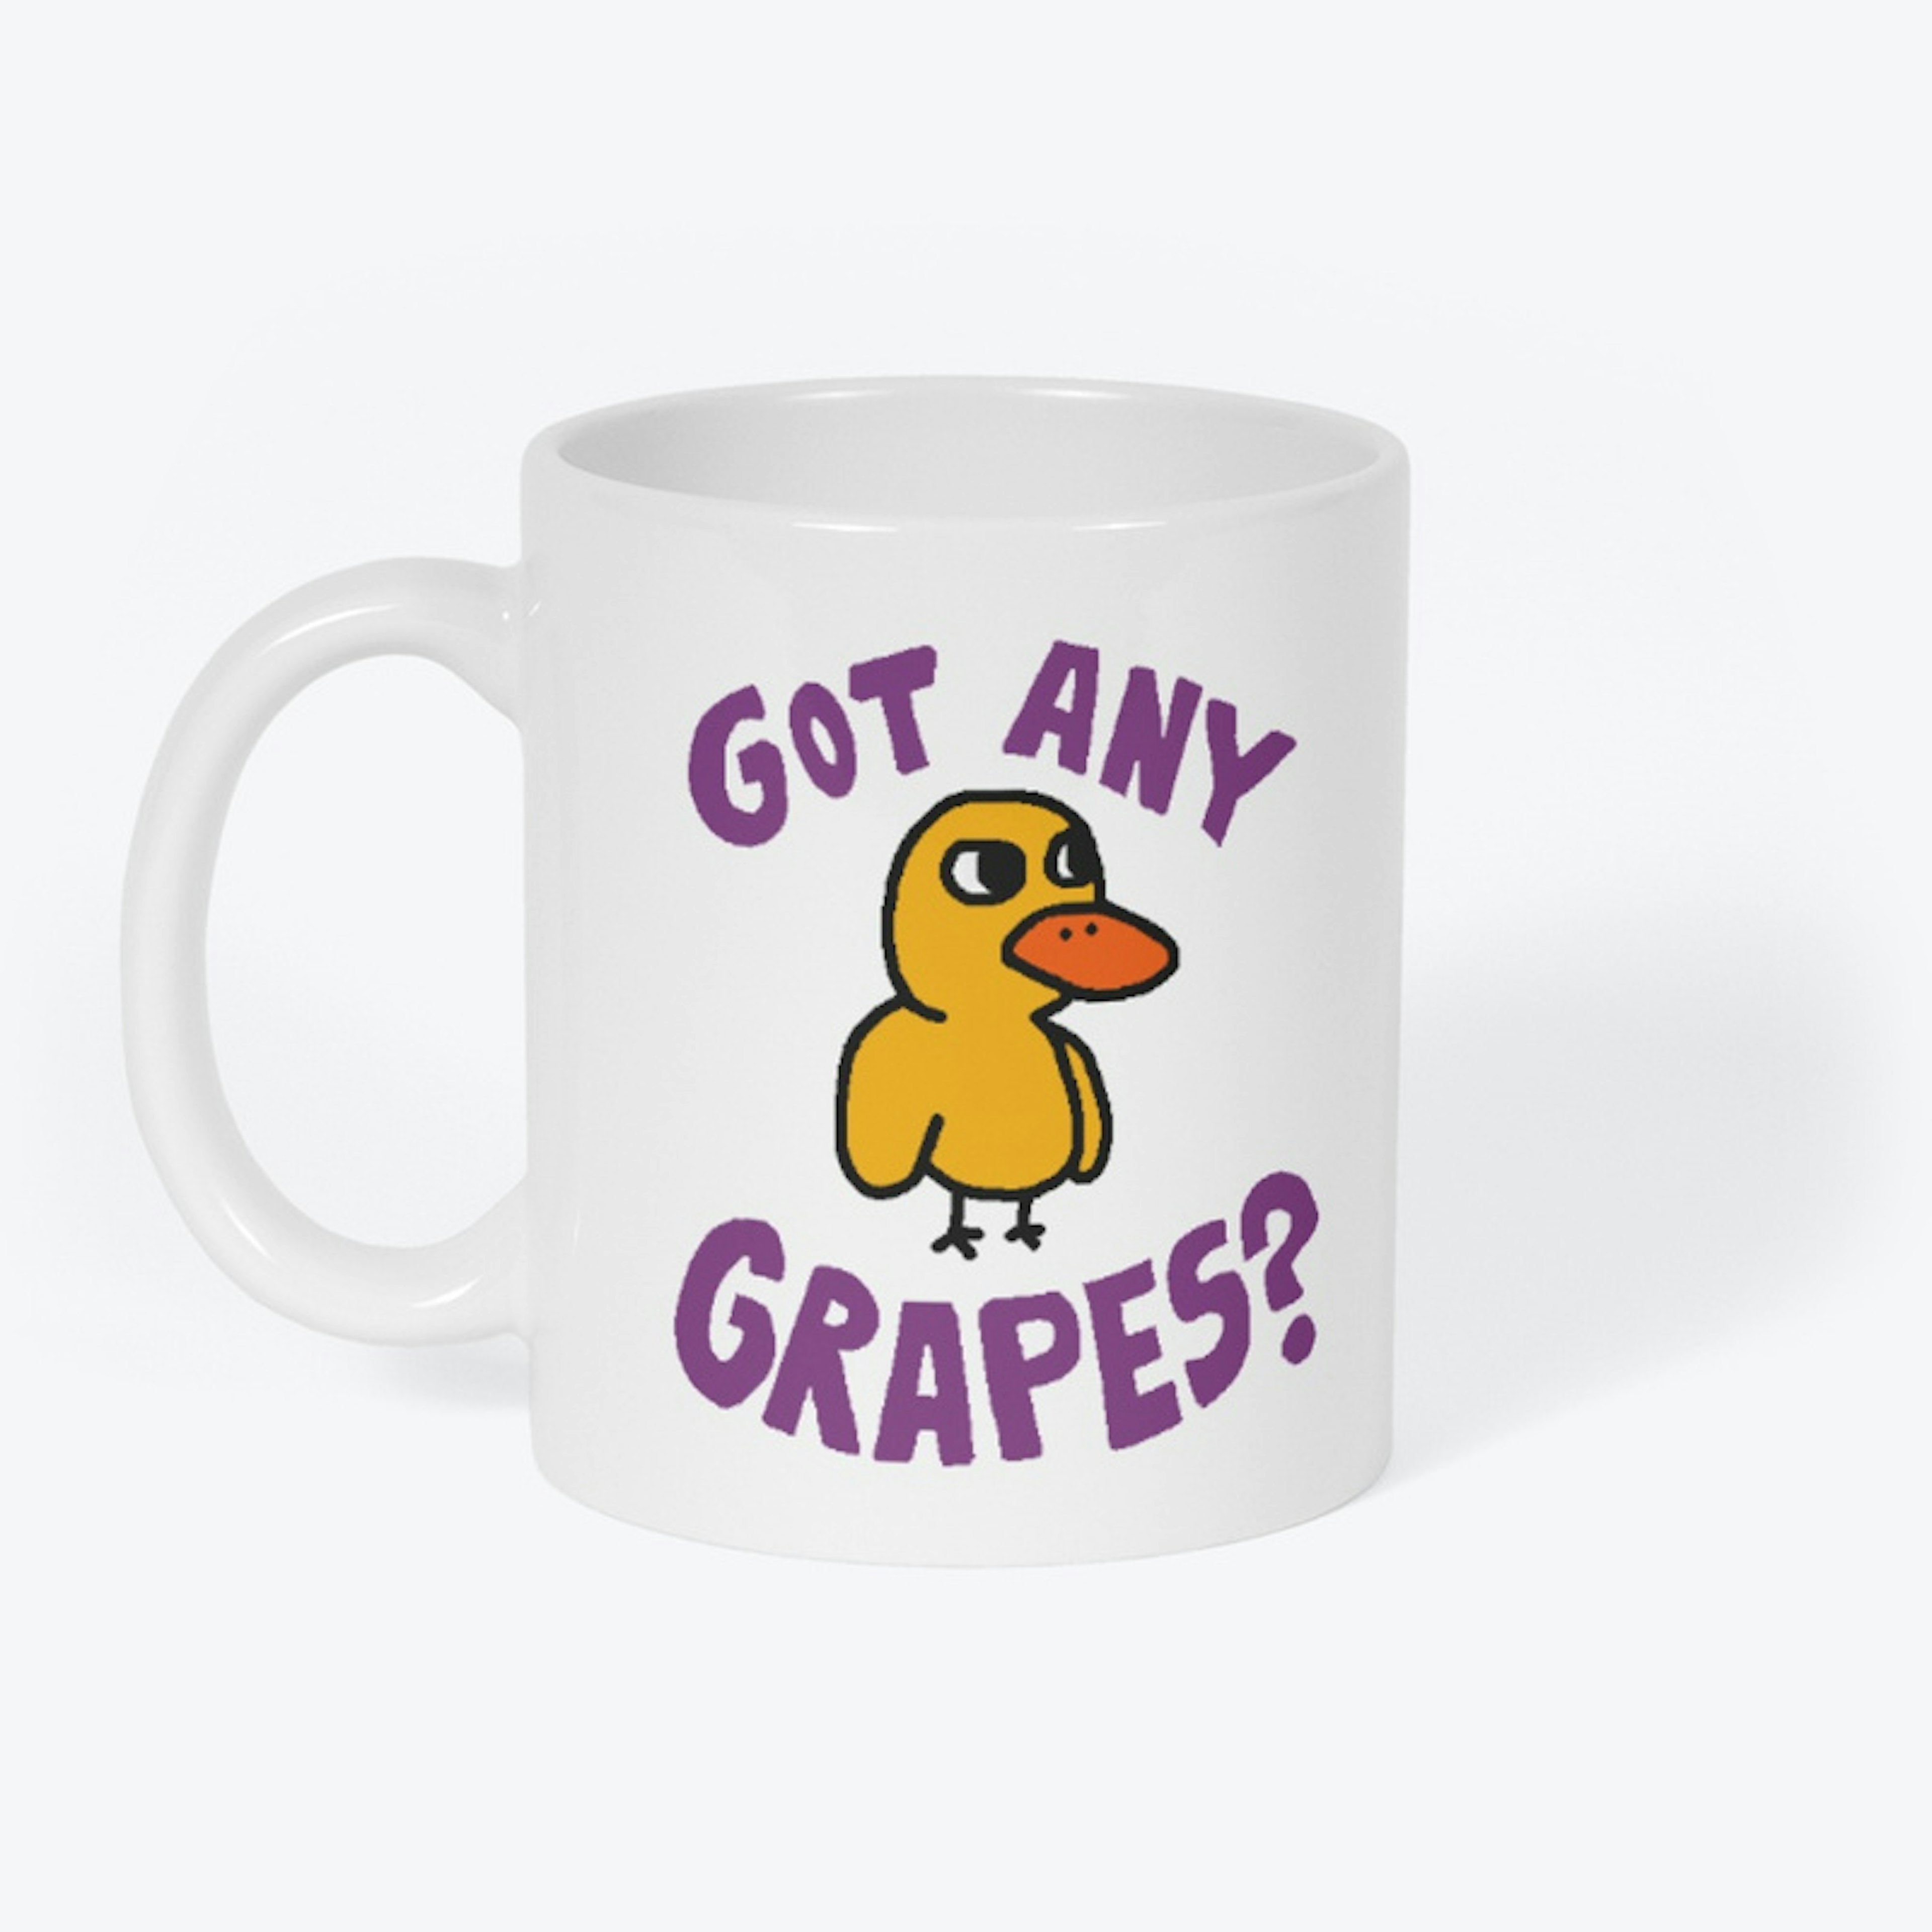 Got any grapes?